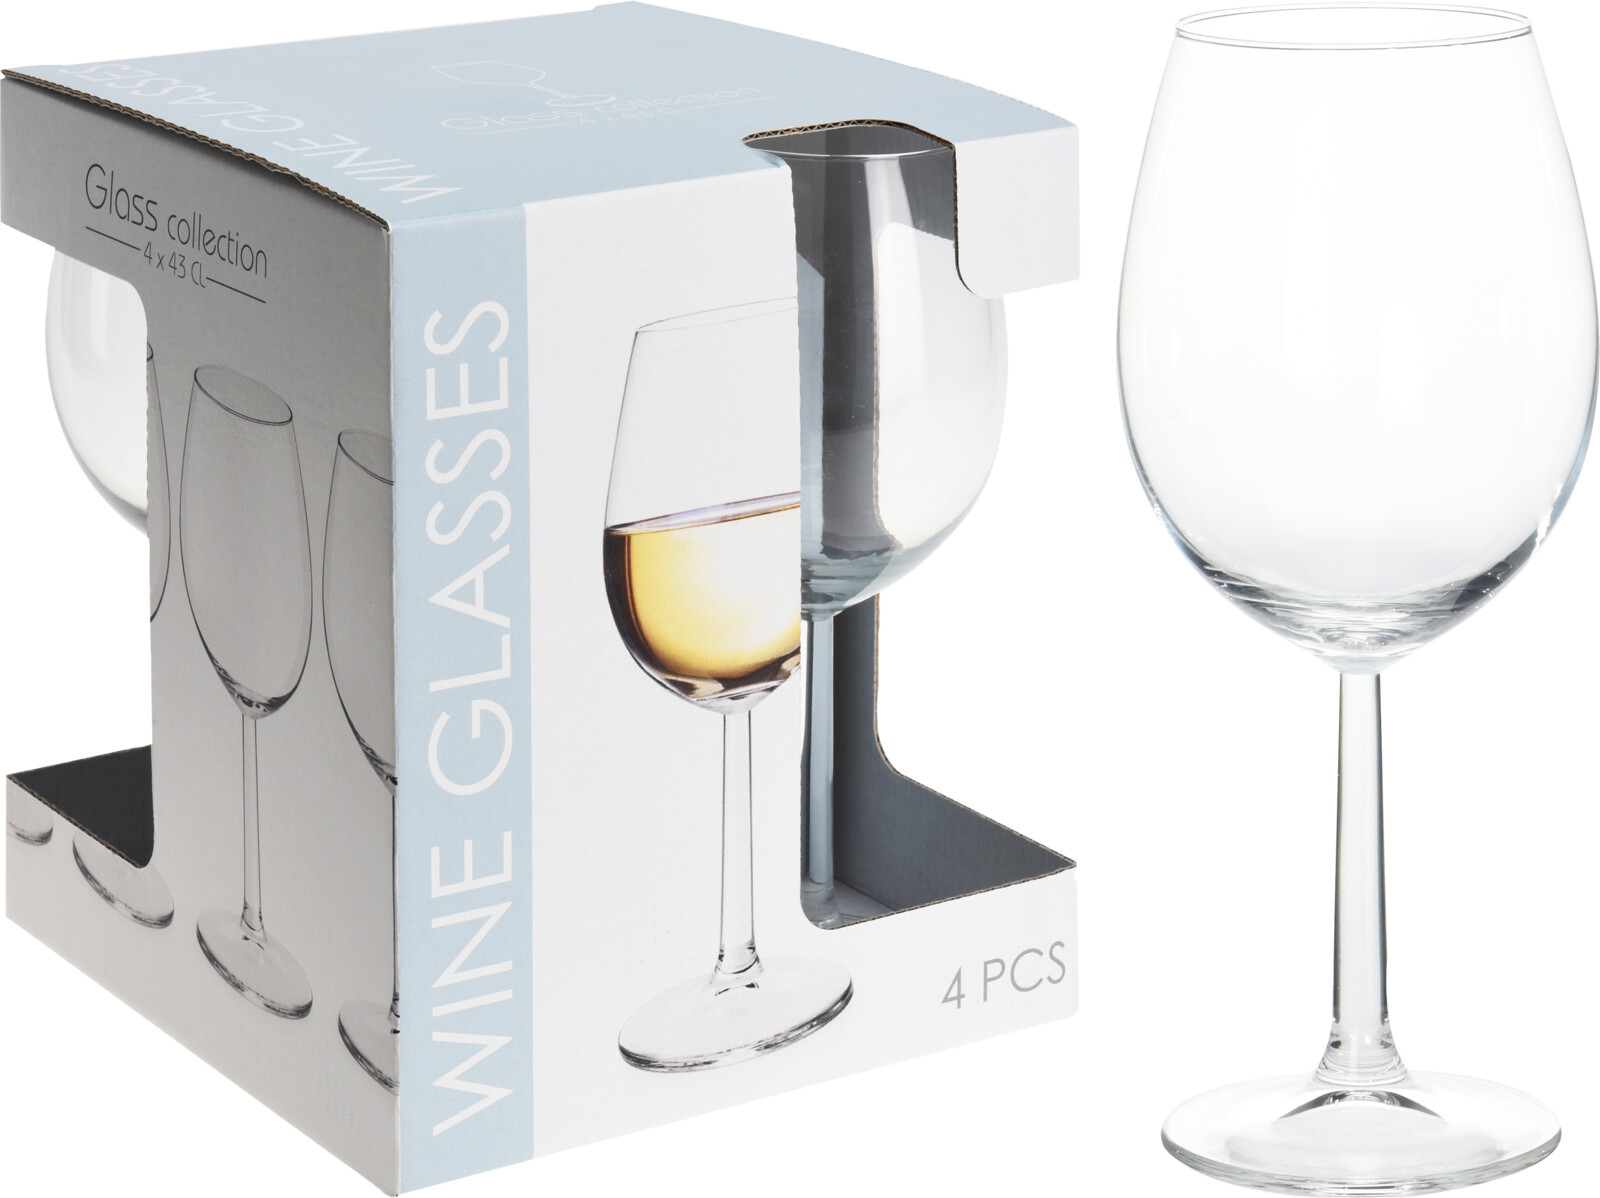 WINE GLASS 4PCS 43CL